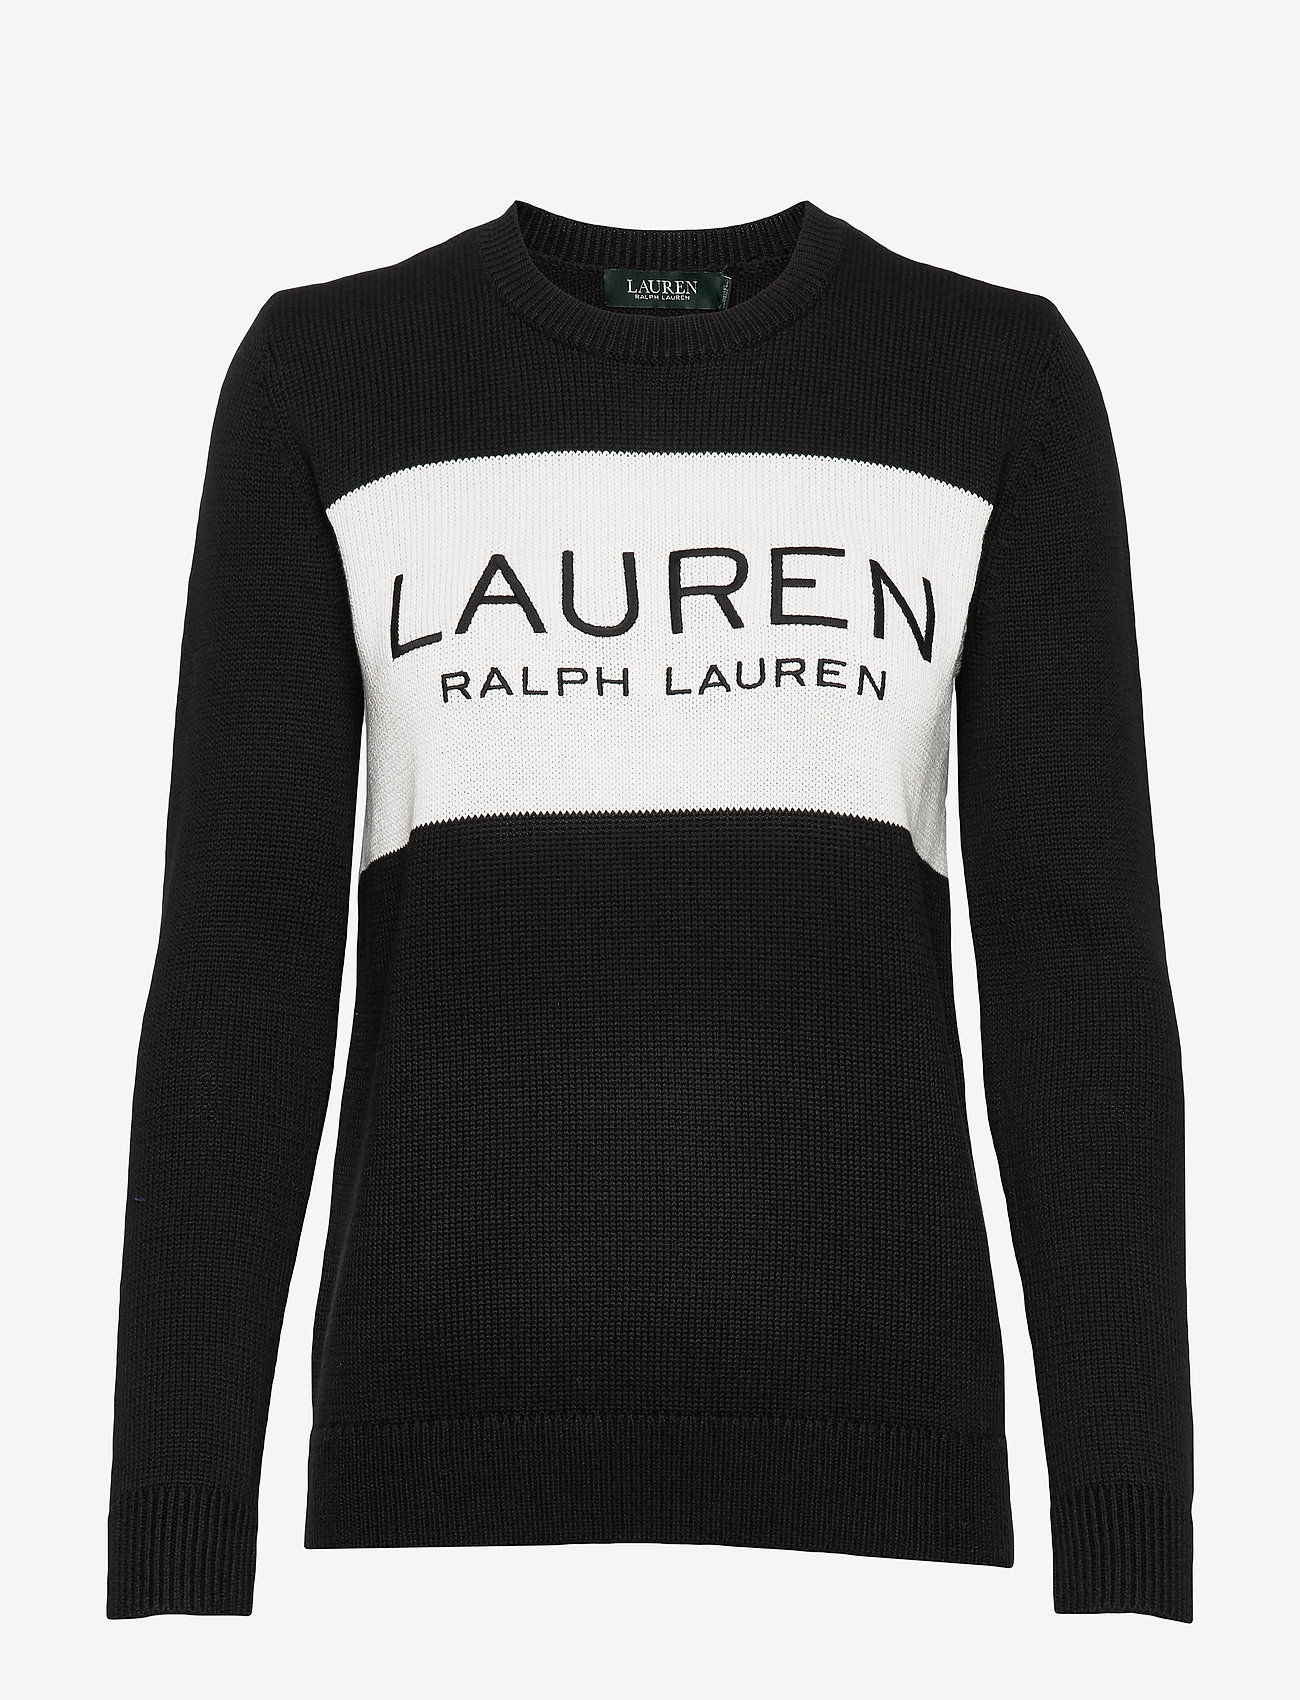 ralph lauren black and white sweater